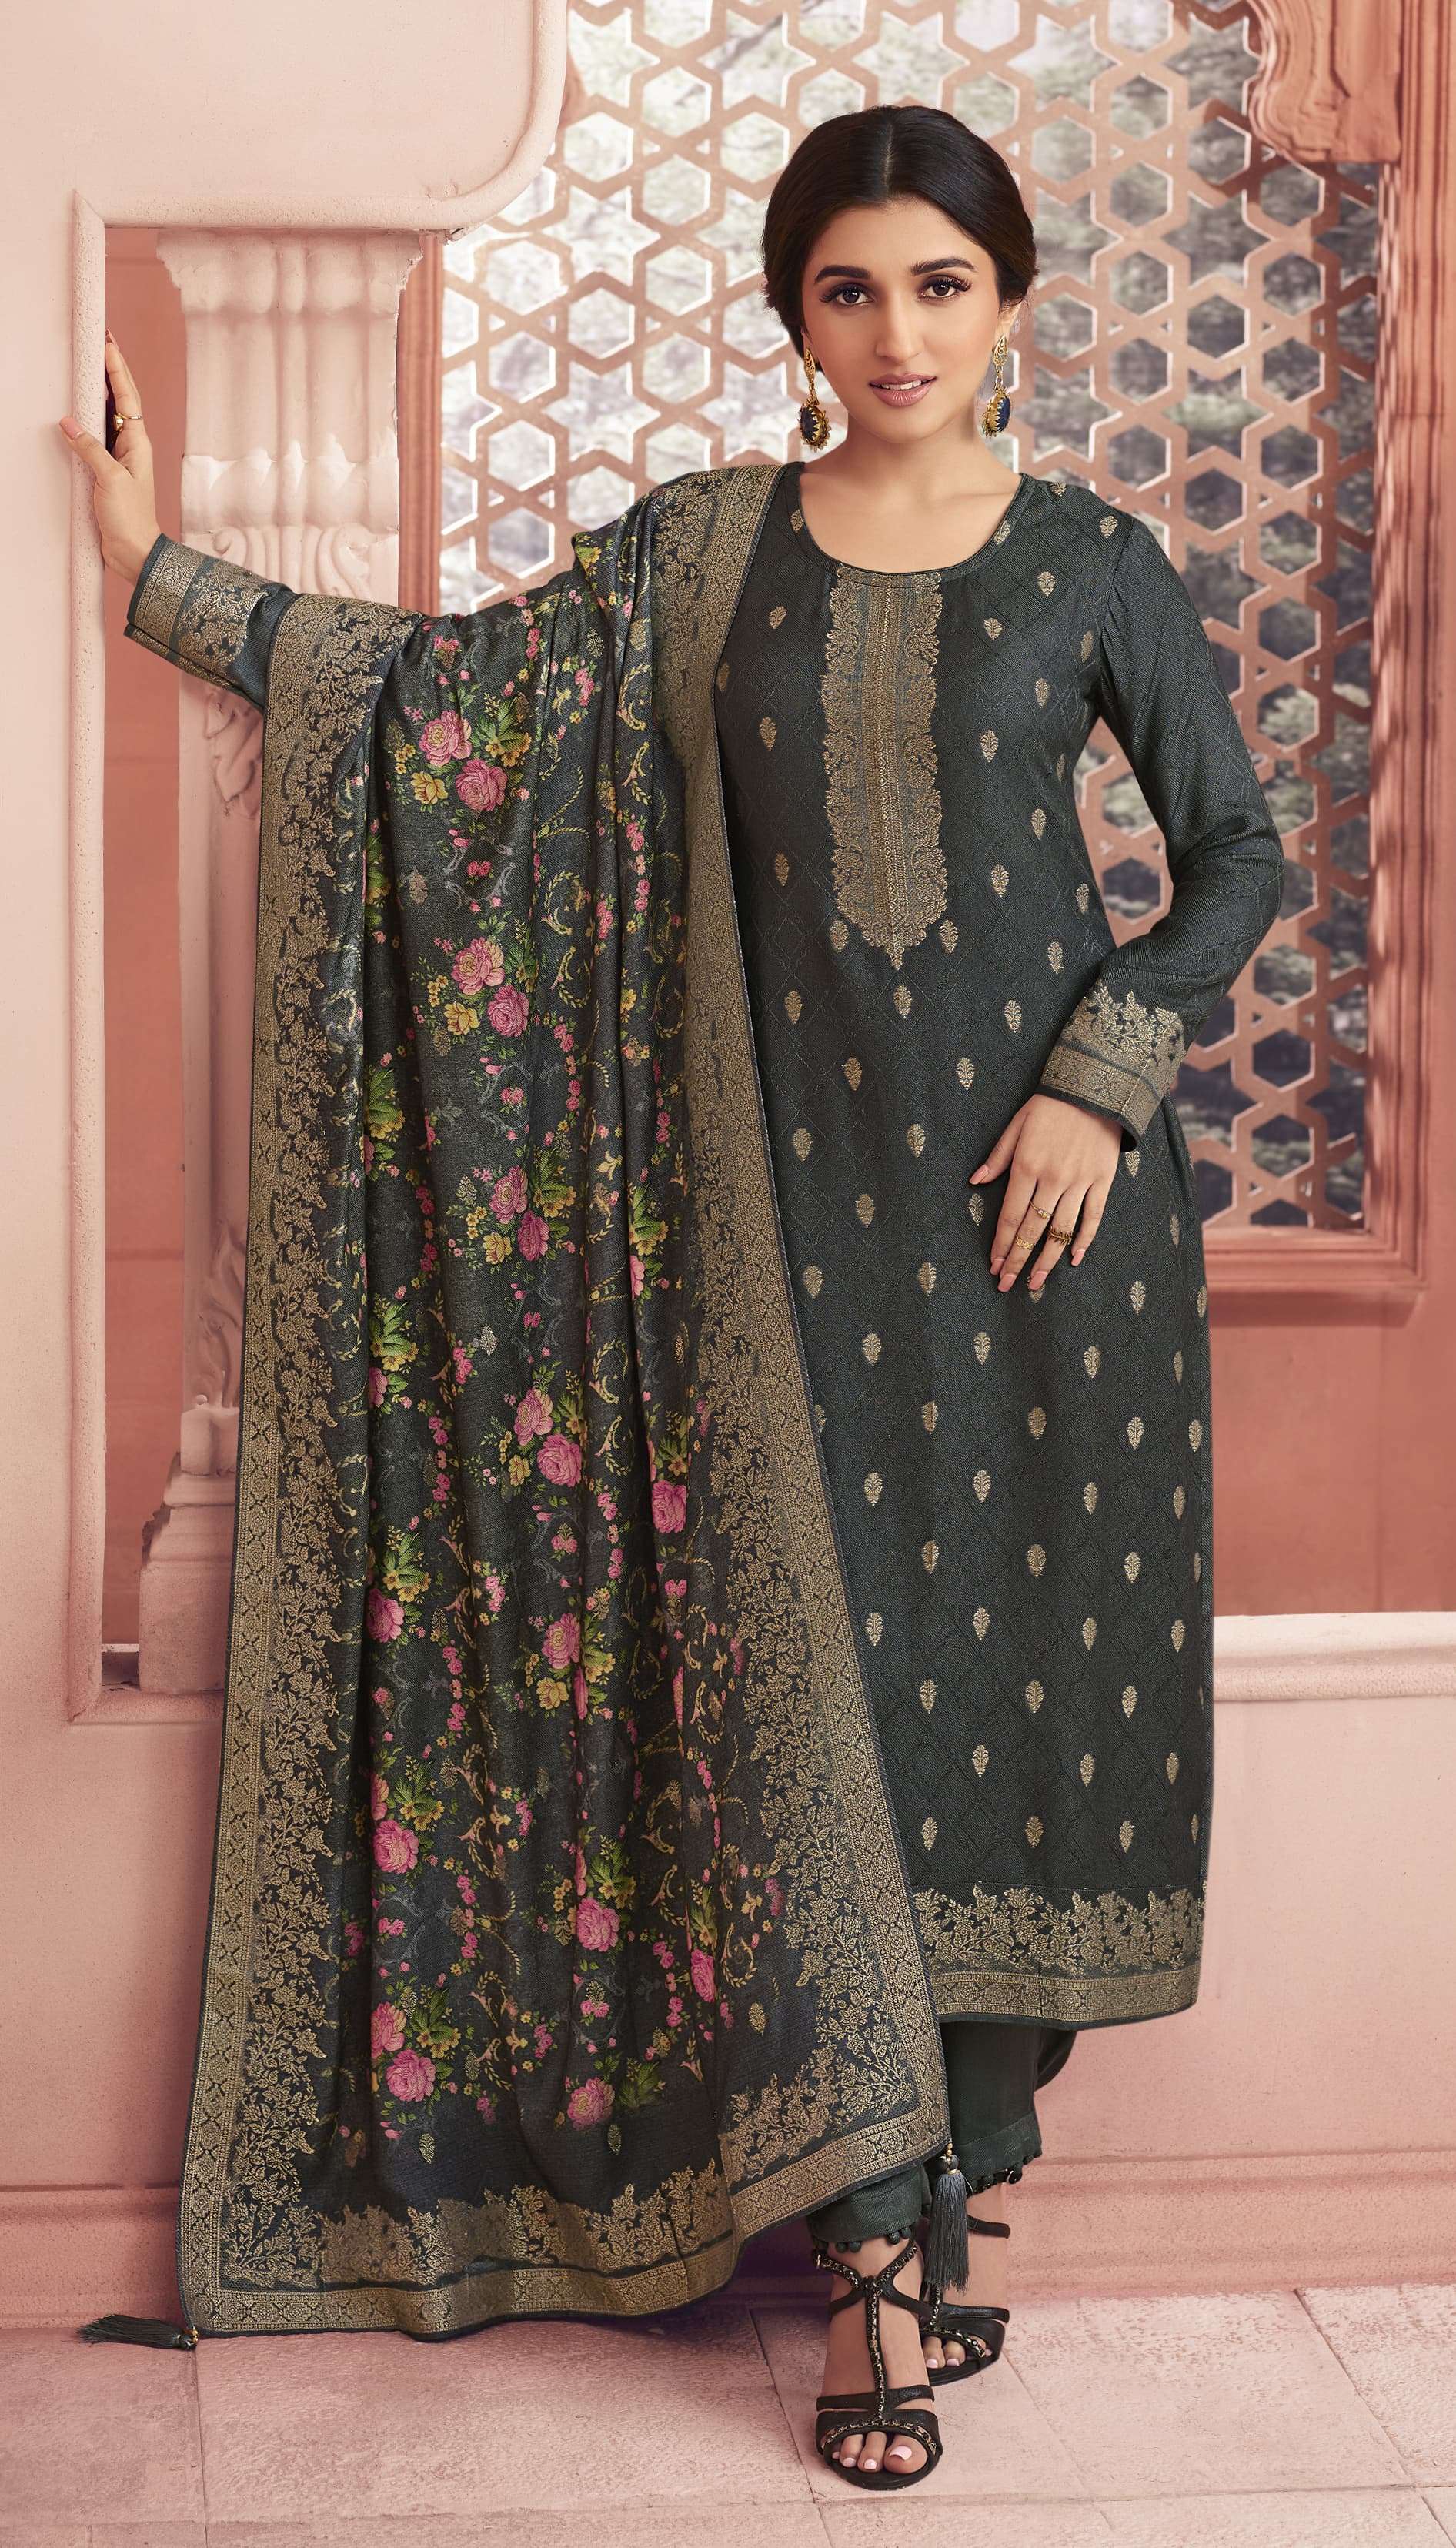 vinay fashion kervin aadhira-4 66031-66036 series latest designer salwar kameez wholesaler surat gujarat